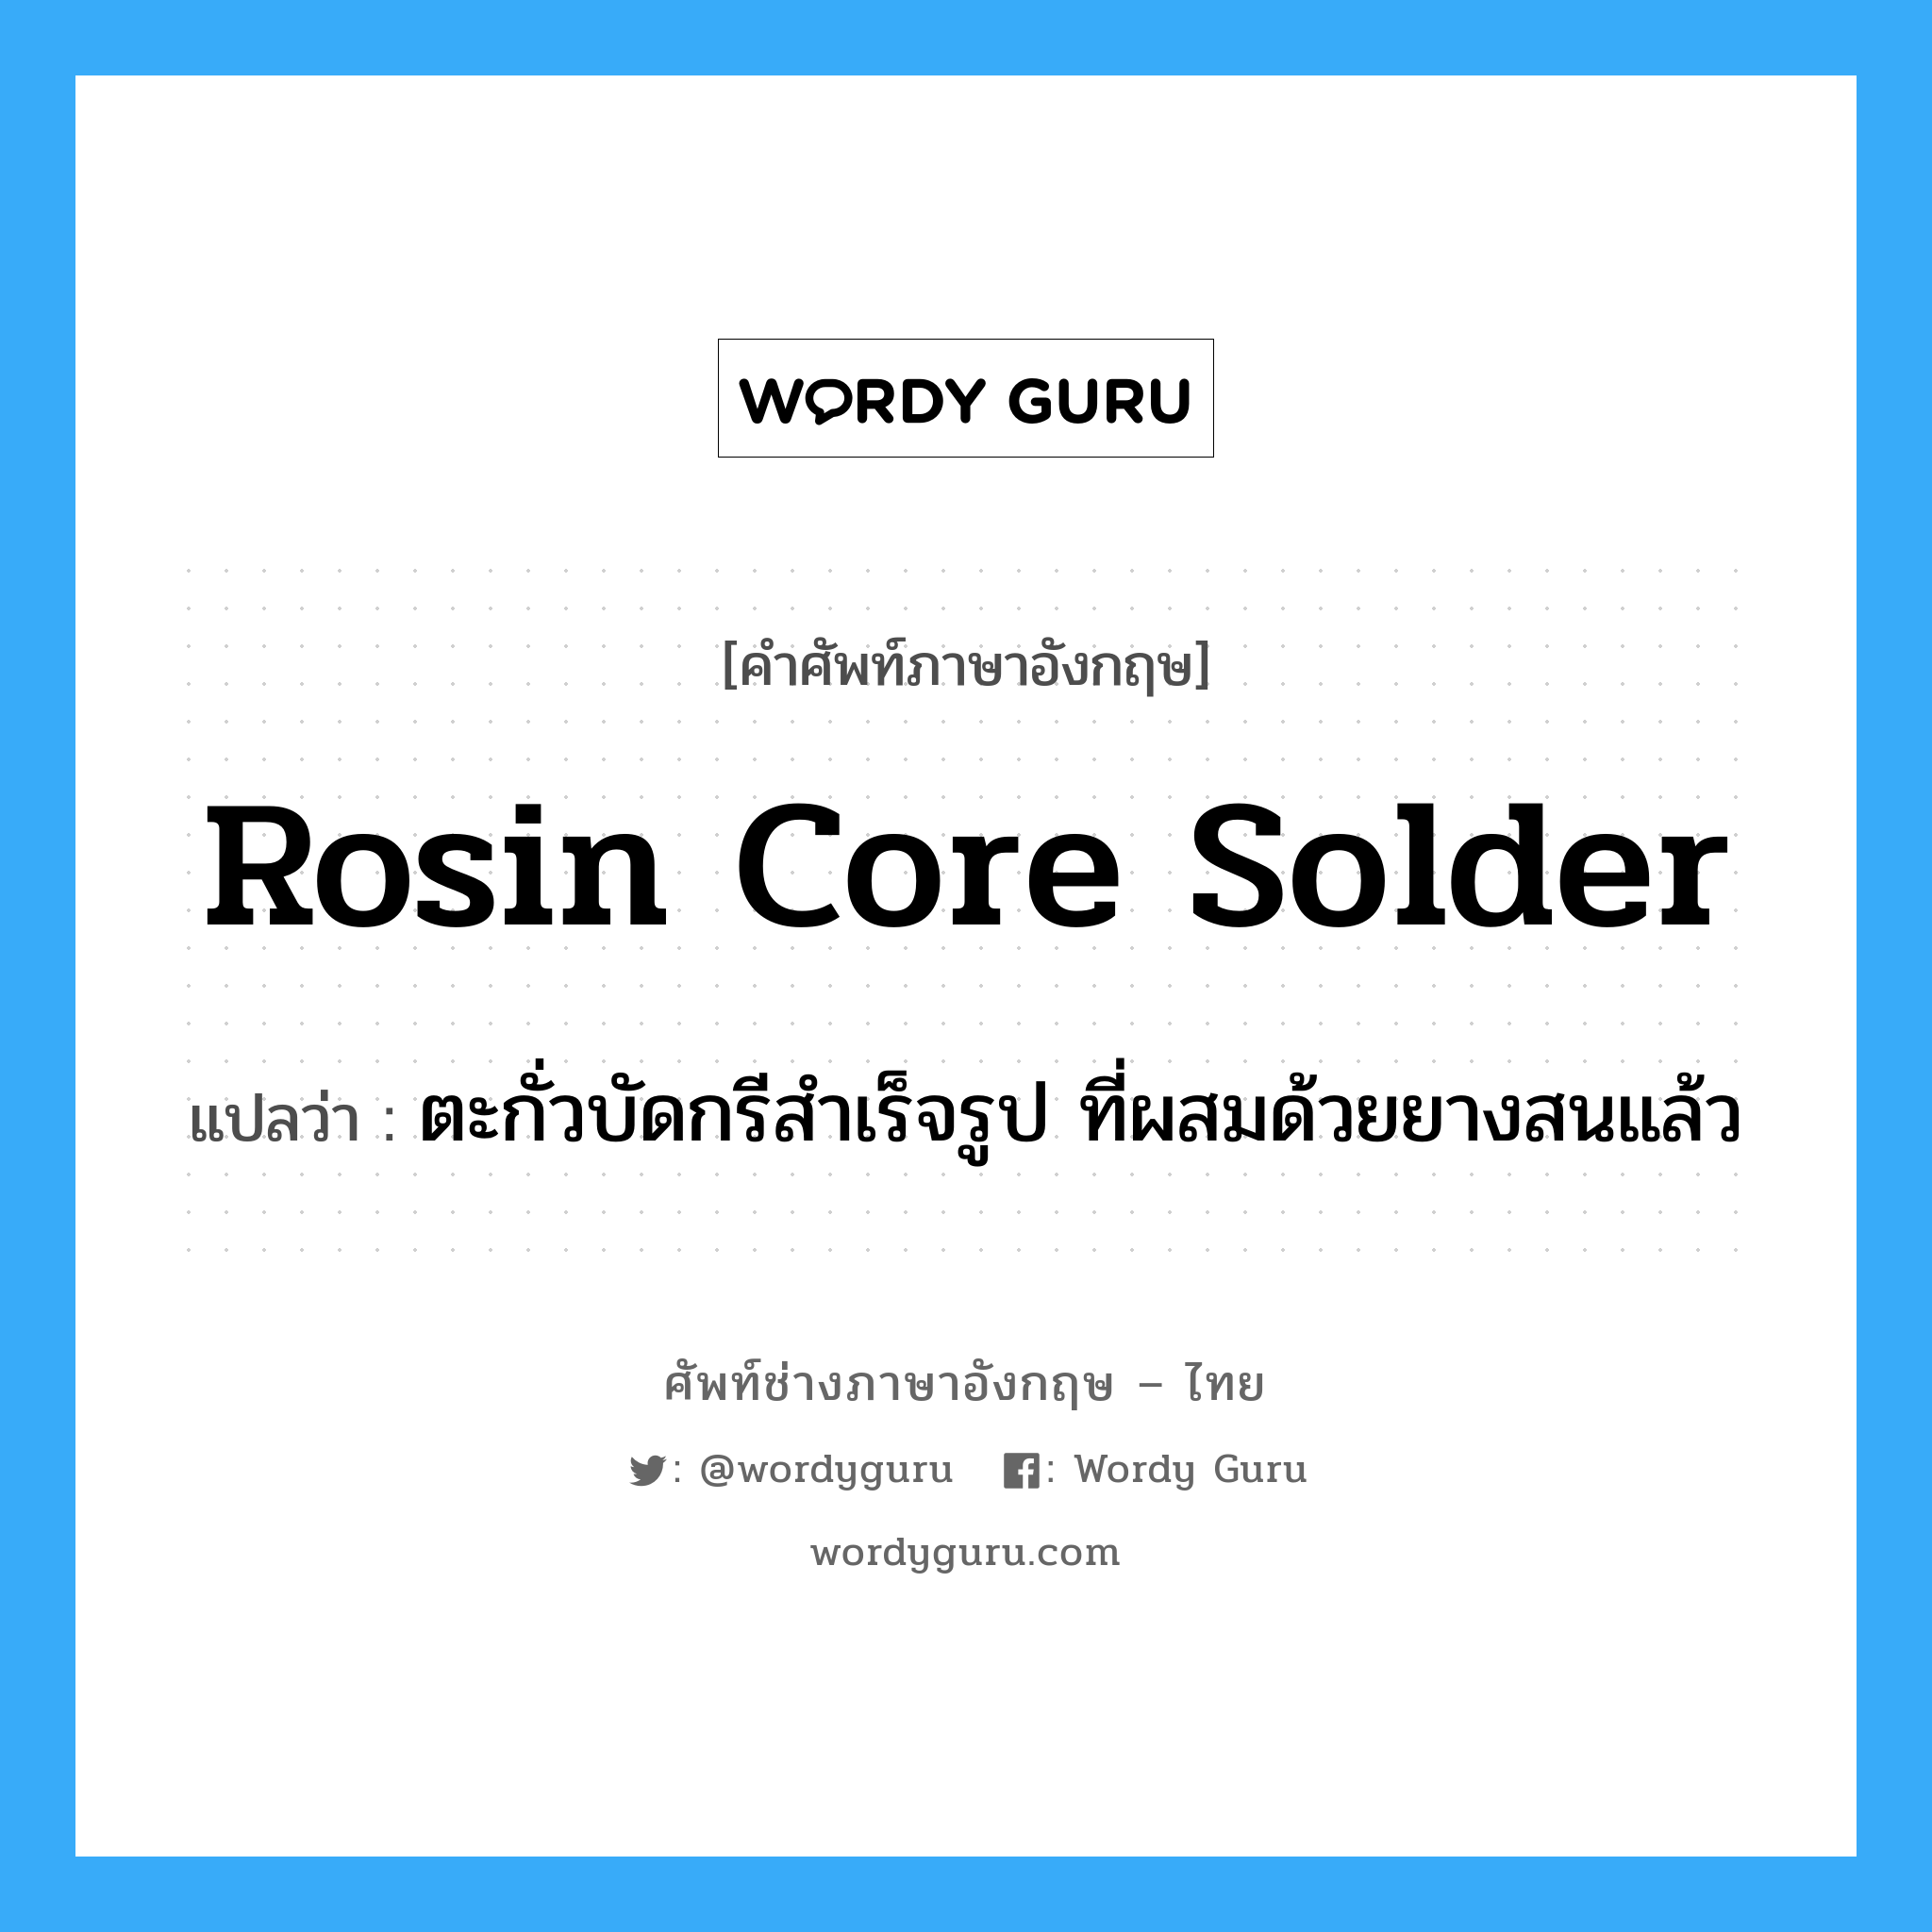 rosin-core solder แปลว่า?, คำศัพท์ช่างภาษาอังกฤษ - ไทย rosin core solder คำศัพท์ภาษาอังกฤษ rosin core solder แปลว่า ตะกั่วบัดกรีสำเร็จรูป ที่ผสมด้วยยางสนแล้ว